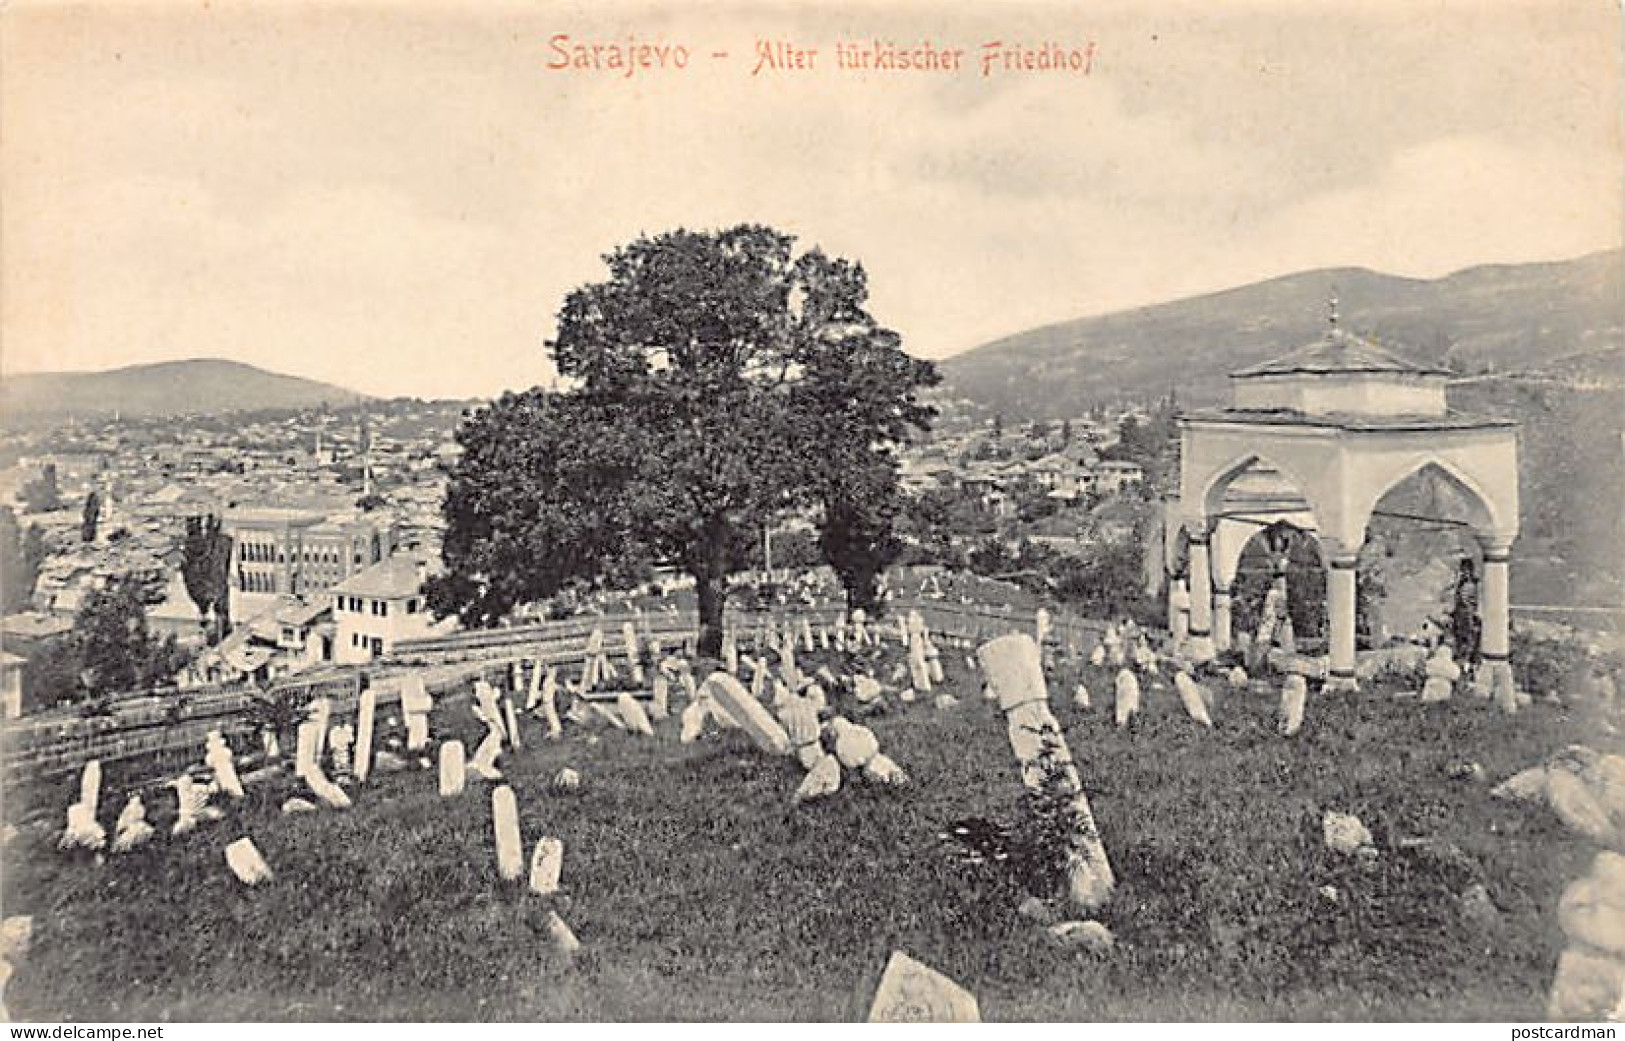 Bosnia - SARAJEVO - The Old Turkish Cemetery - Publ. Stengel & Co. 5116 - Bosnien-Herzegowina